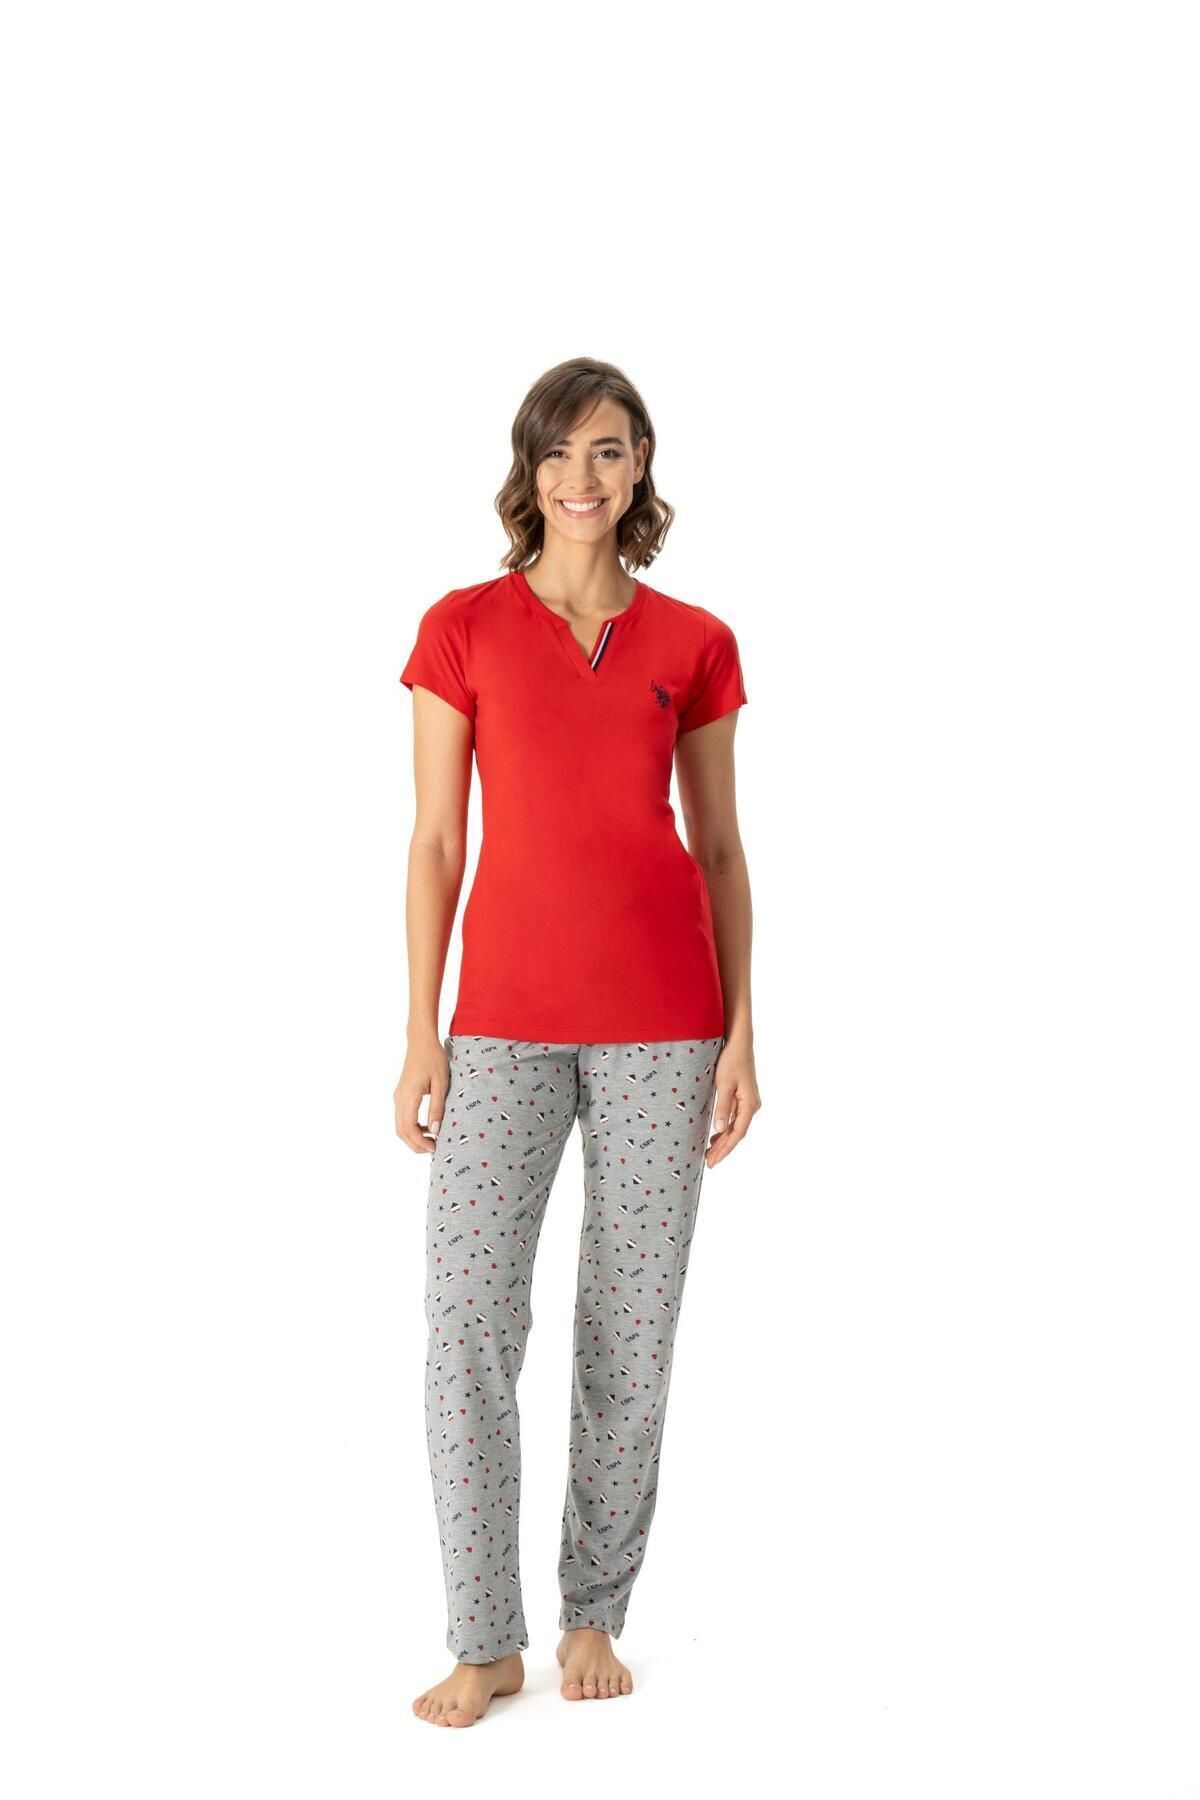 U.S. Polo Assn. Kadın Kırmızı V Yaka Cepli Pijama Takımı 17004